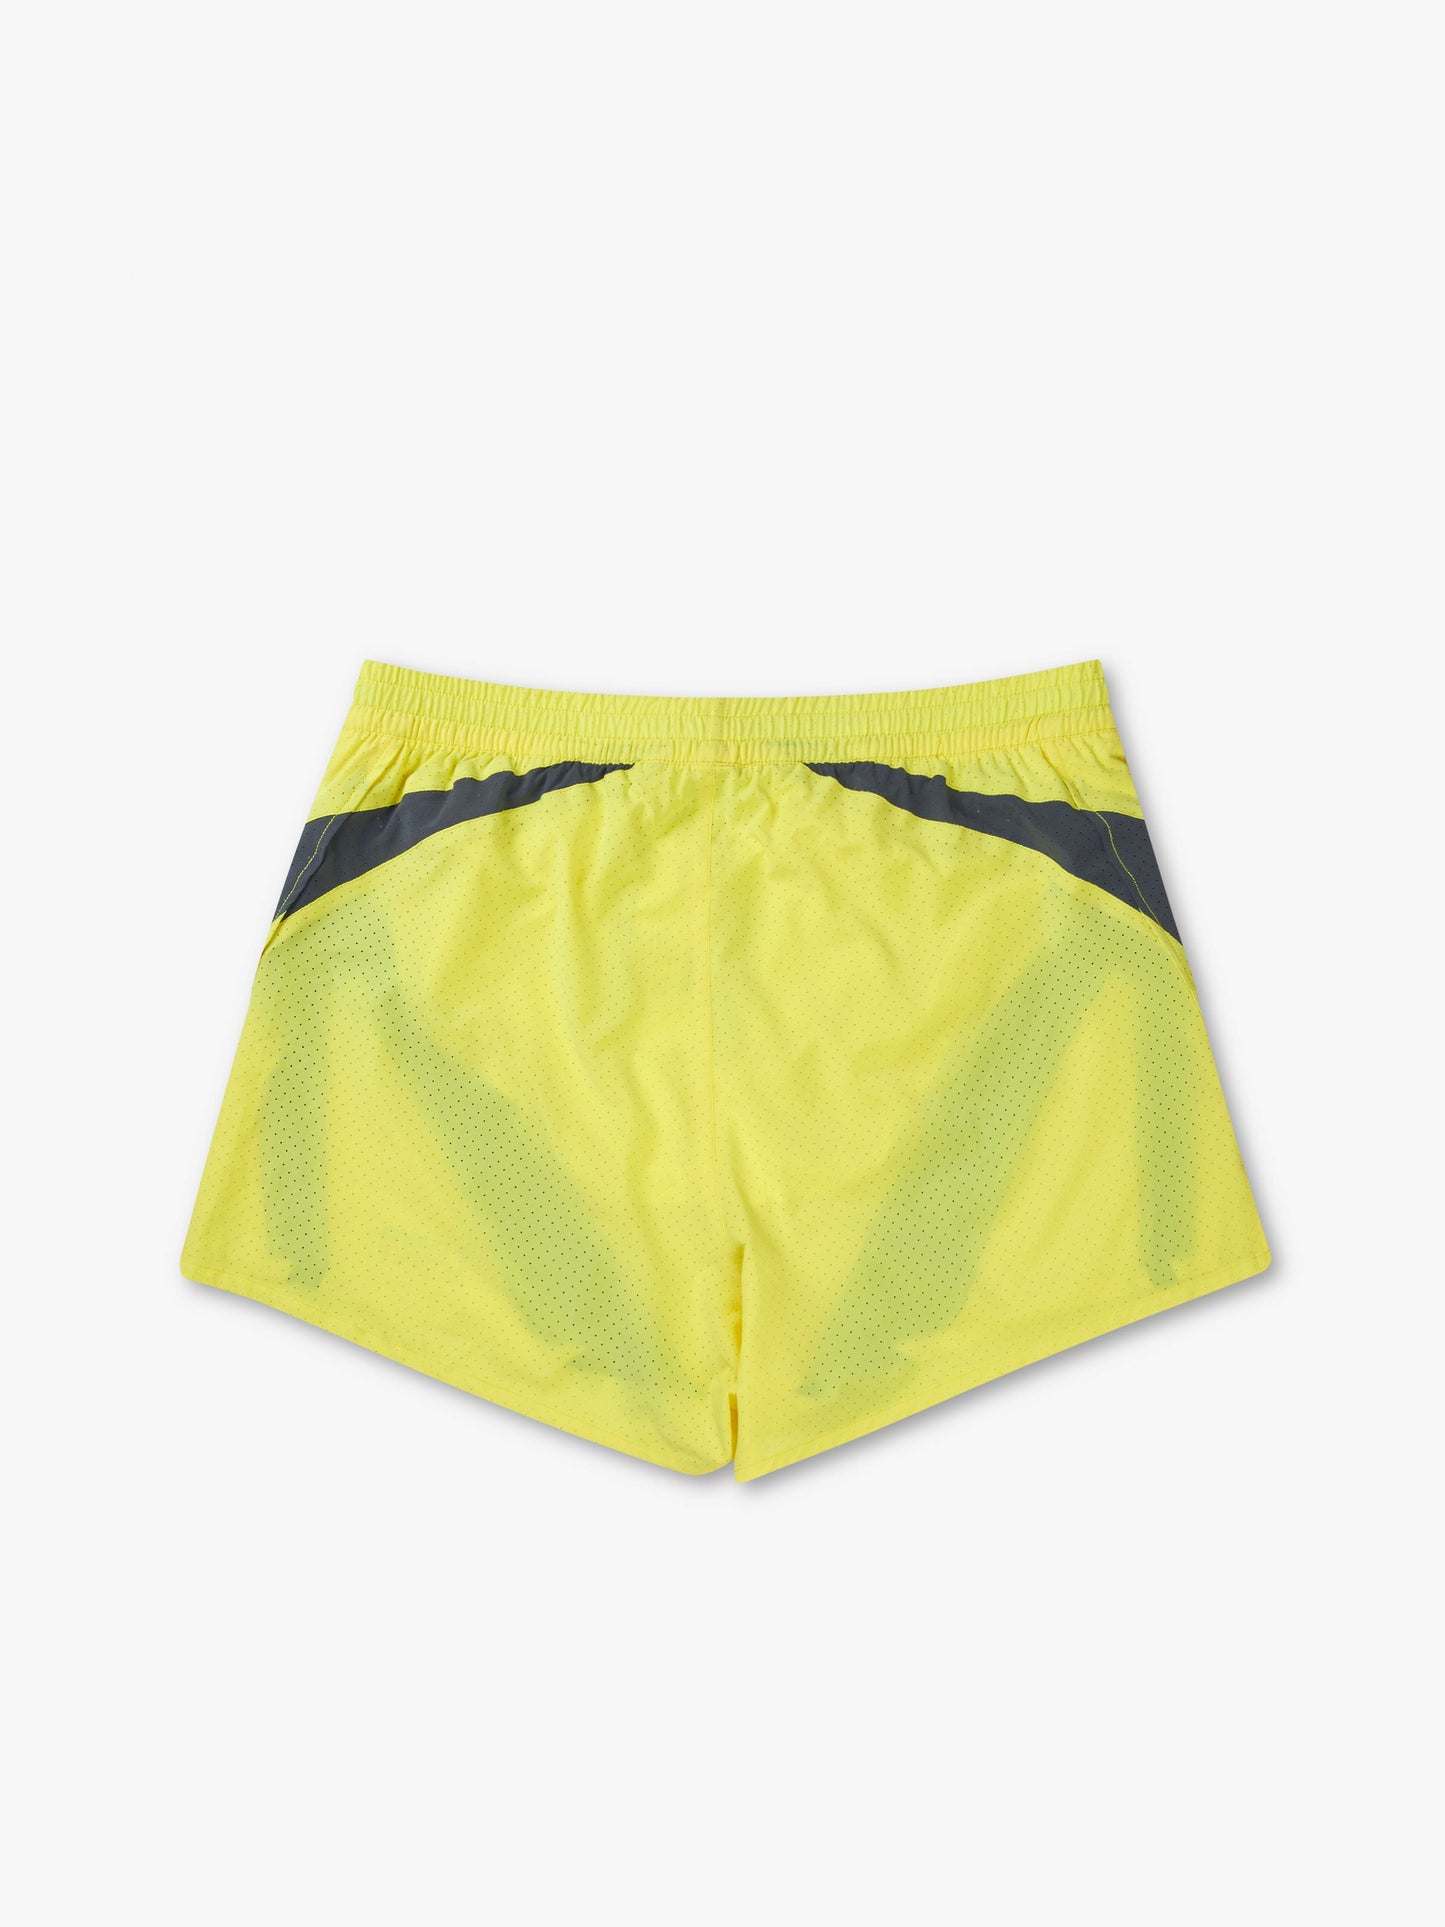 7 DAYS Sprinter Split Shorts Shorts 813 Lemon Tonic